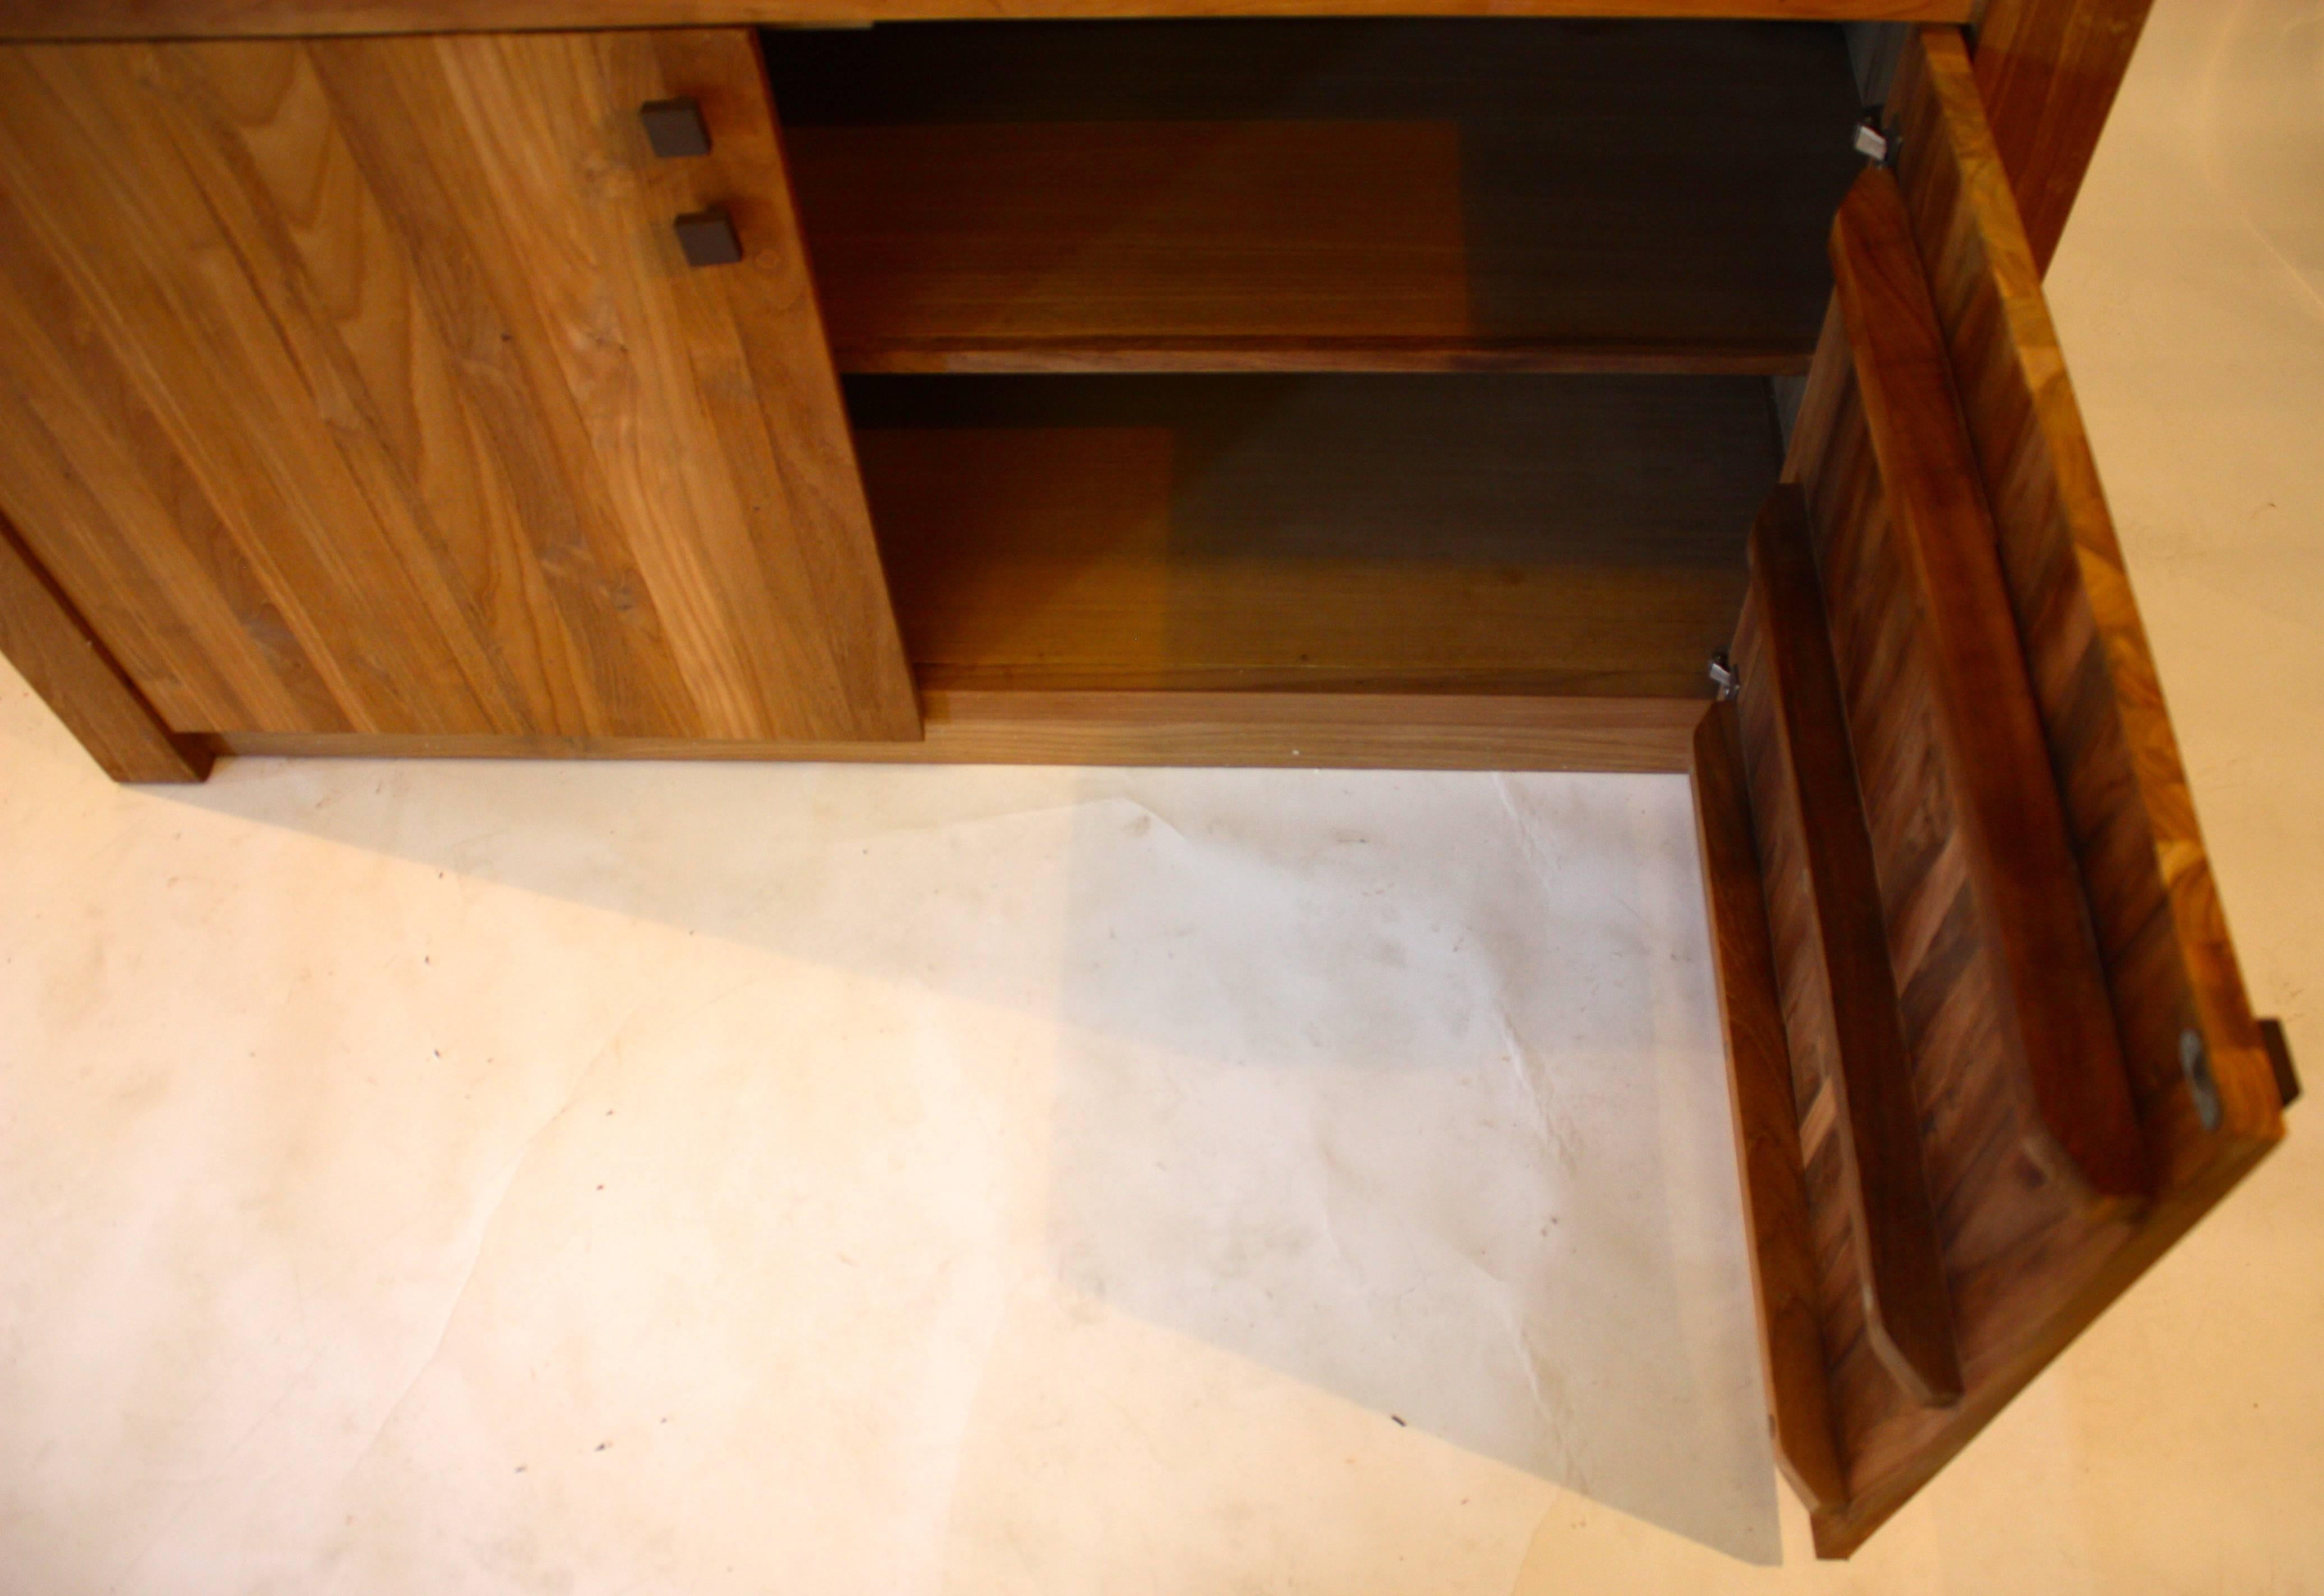 Cypress wood cabinet. Sleek, beautiful lines.